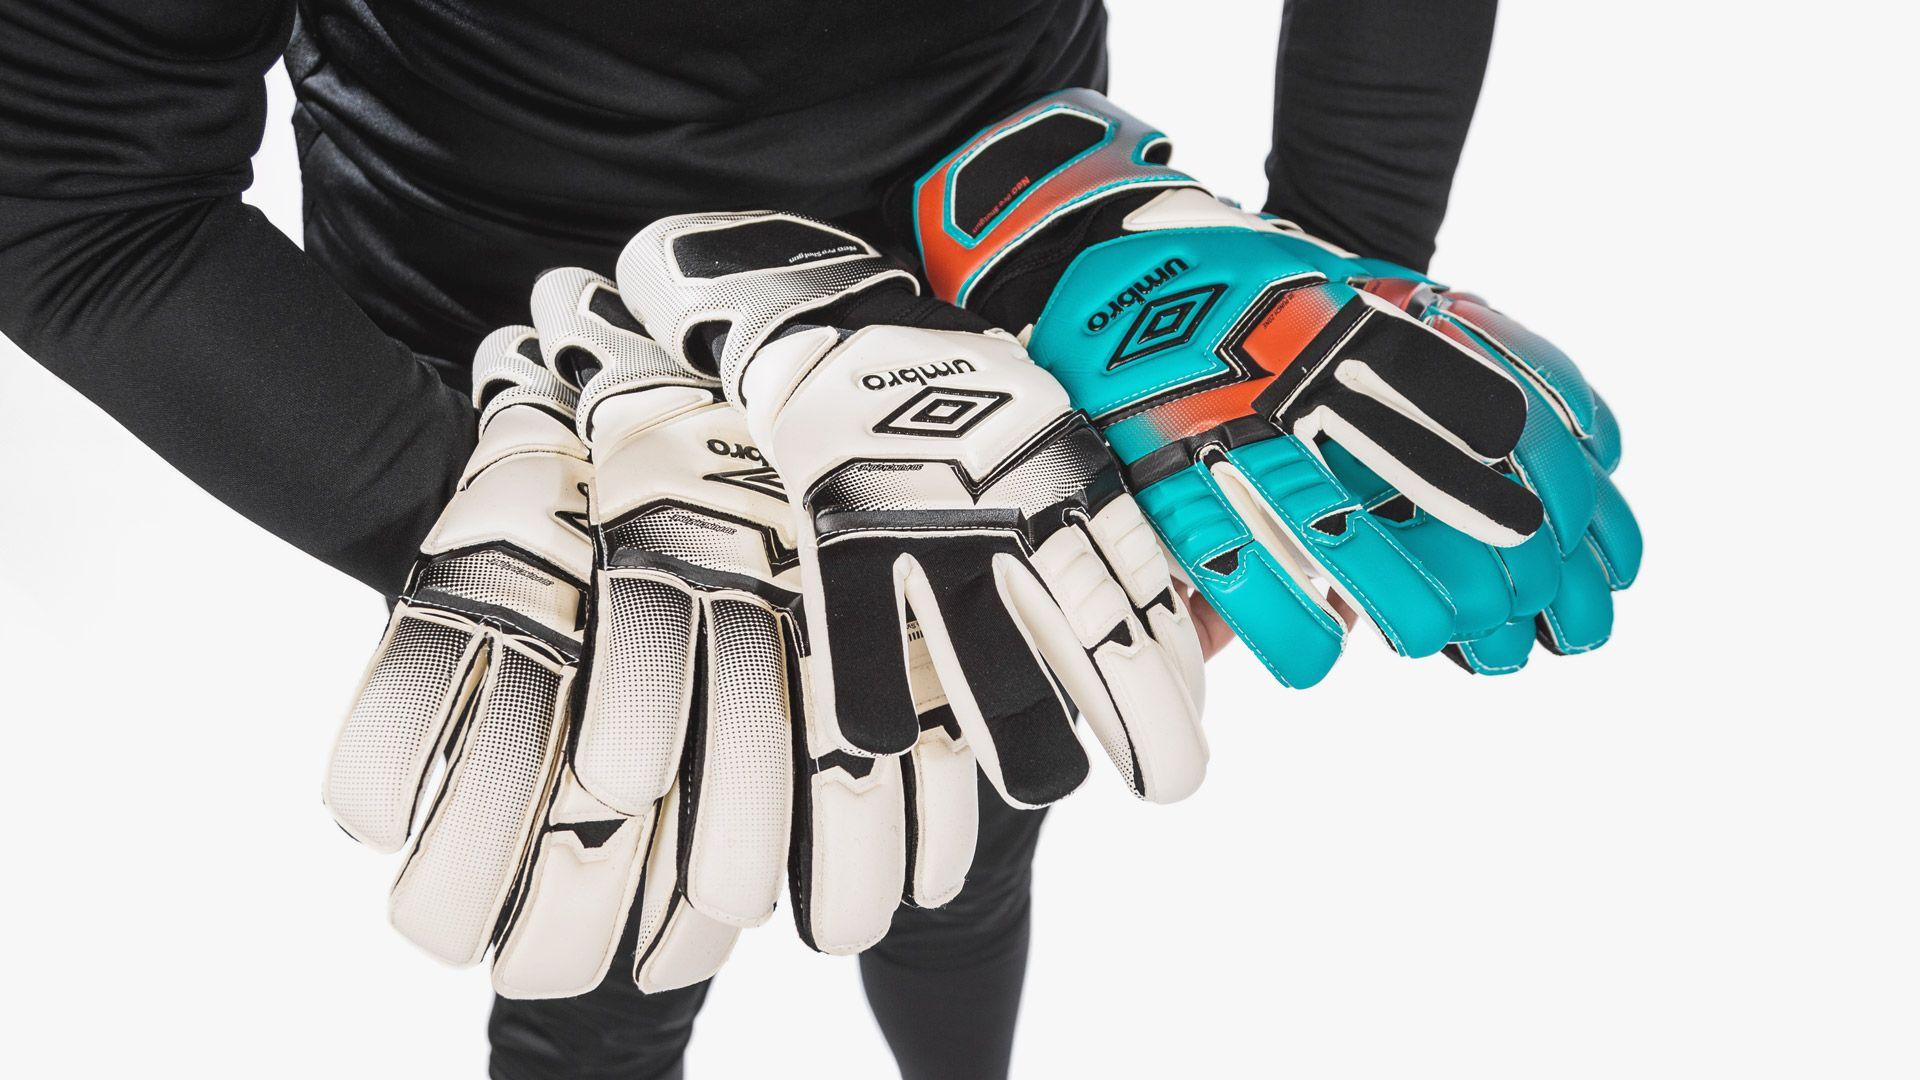 Umbro launch 6 Neo Pro goalkeeper gloves